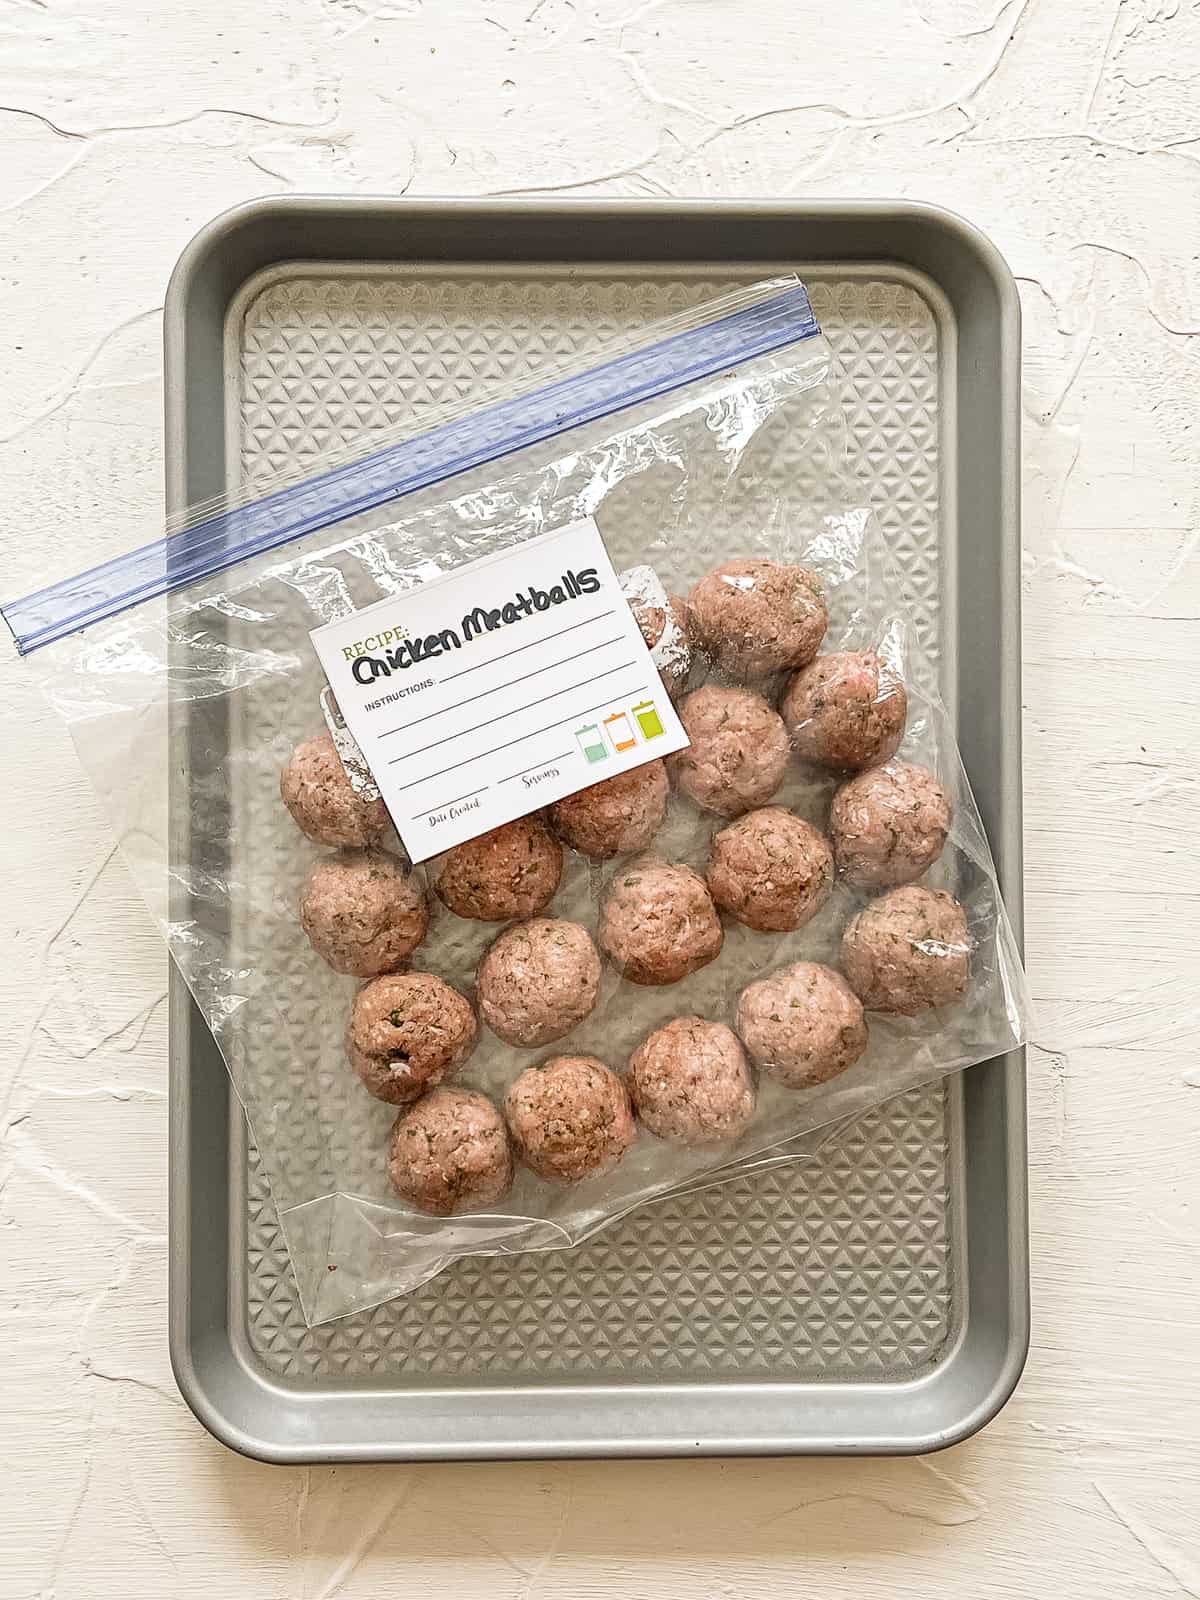 Frozen chicken meatballs in a freezer bag.